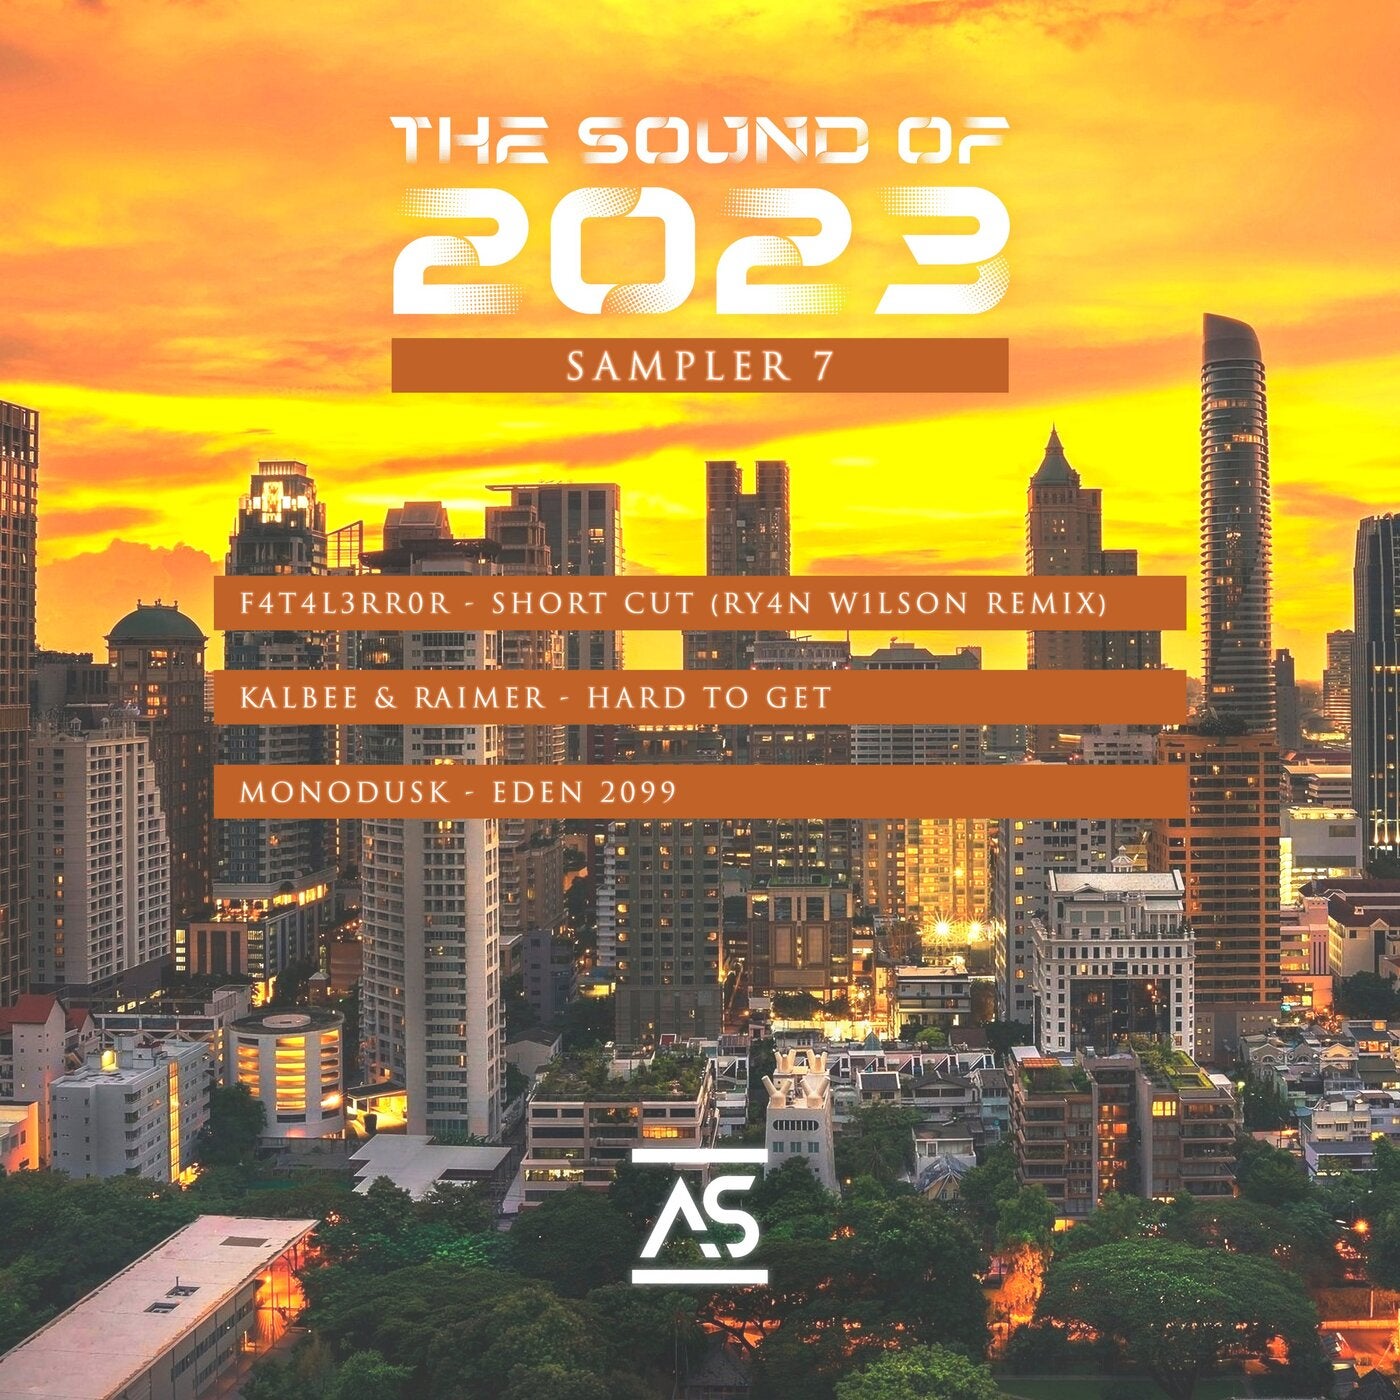 F4T4L3RR0R, Kalbee & Raimer – The Sound of 2023 Sampler 7 [ASR483]